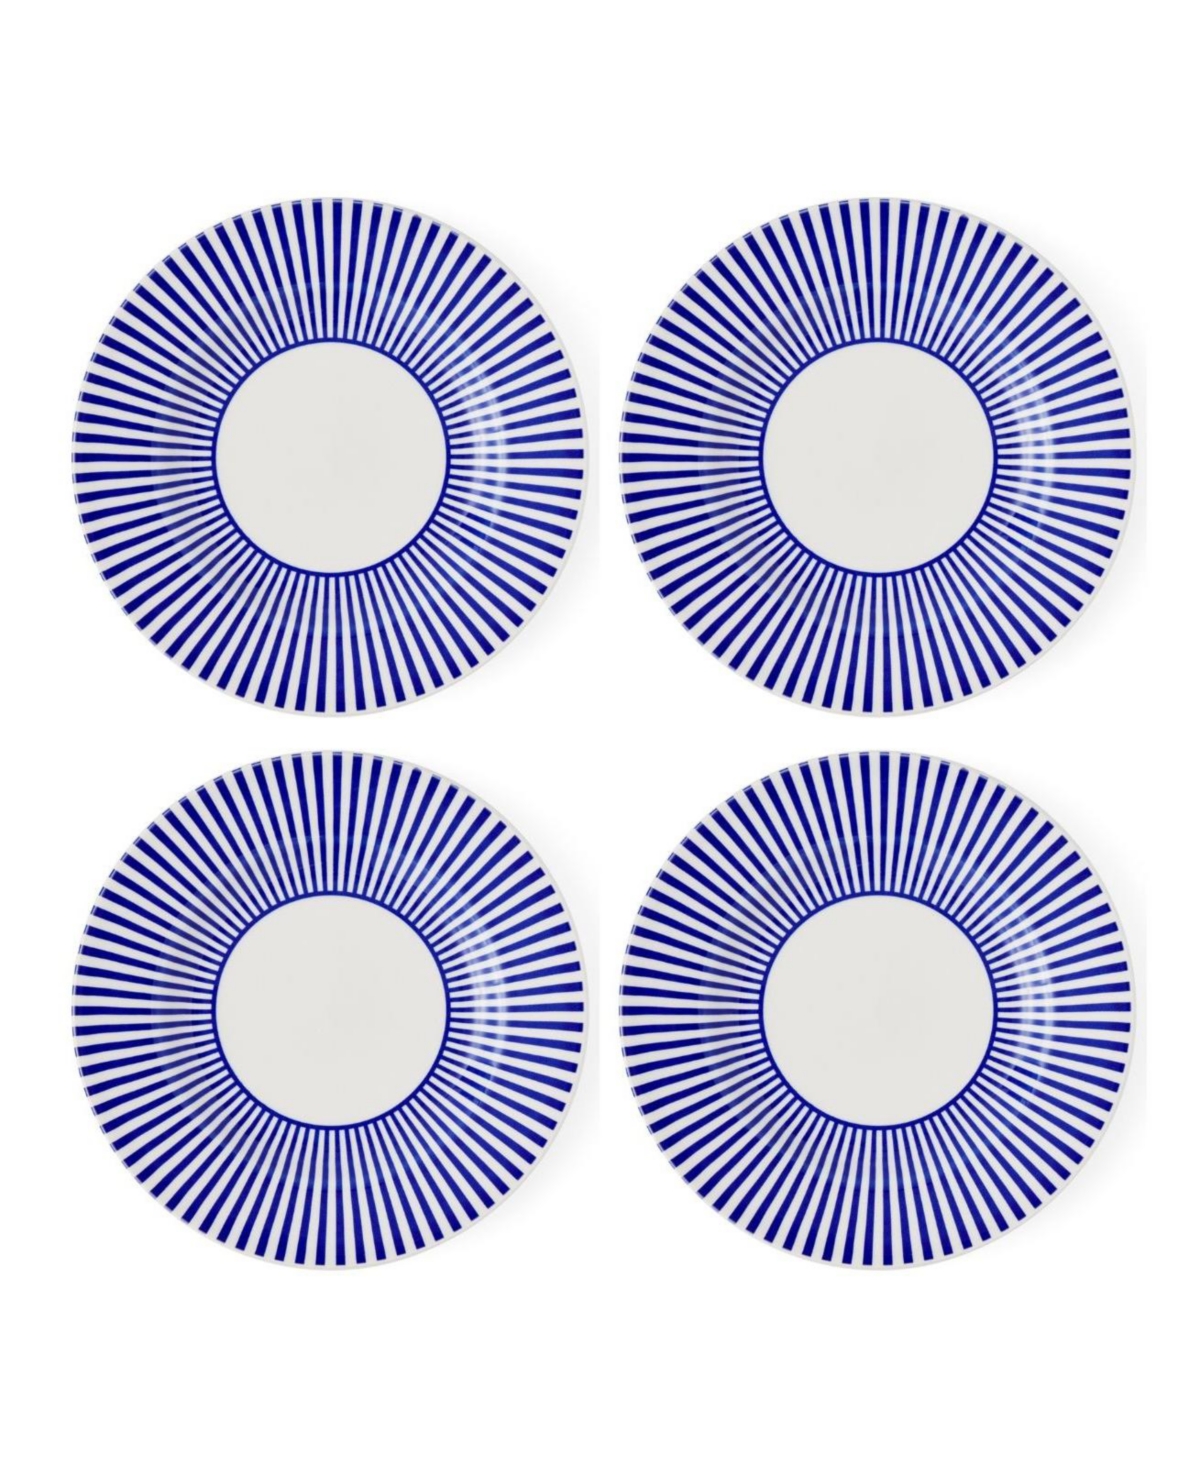 Blue Italian Steccato Salad Plates, Set of 4 - Blue